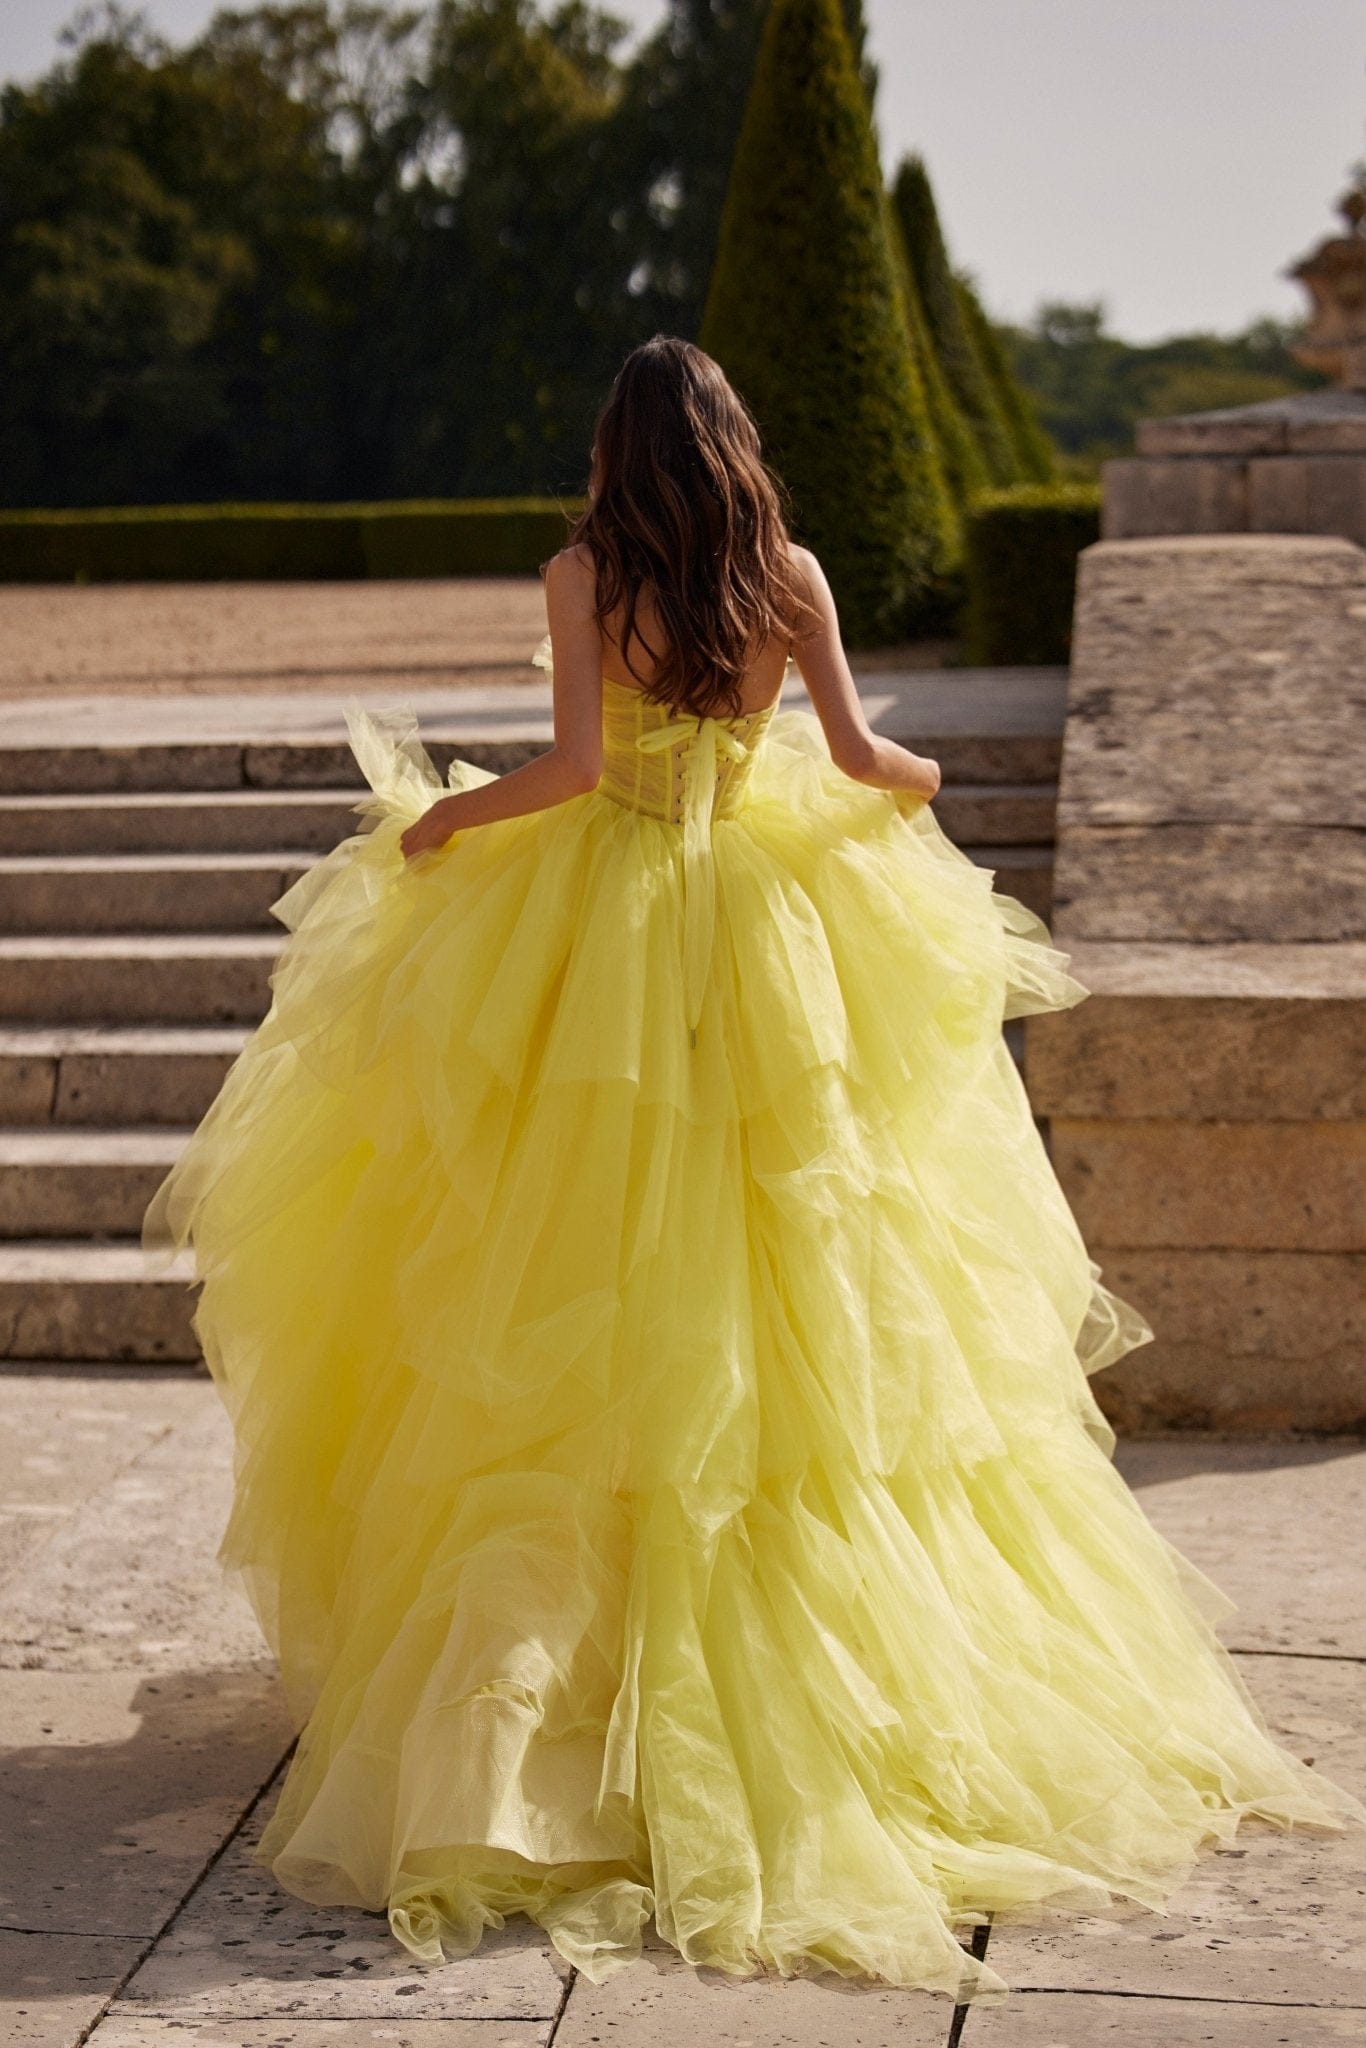 Fairytale frill-layered maxi dress in vivid yellow - Milla